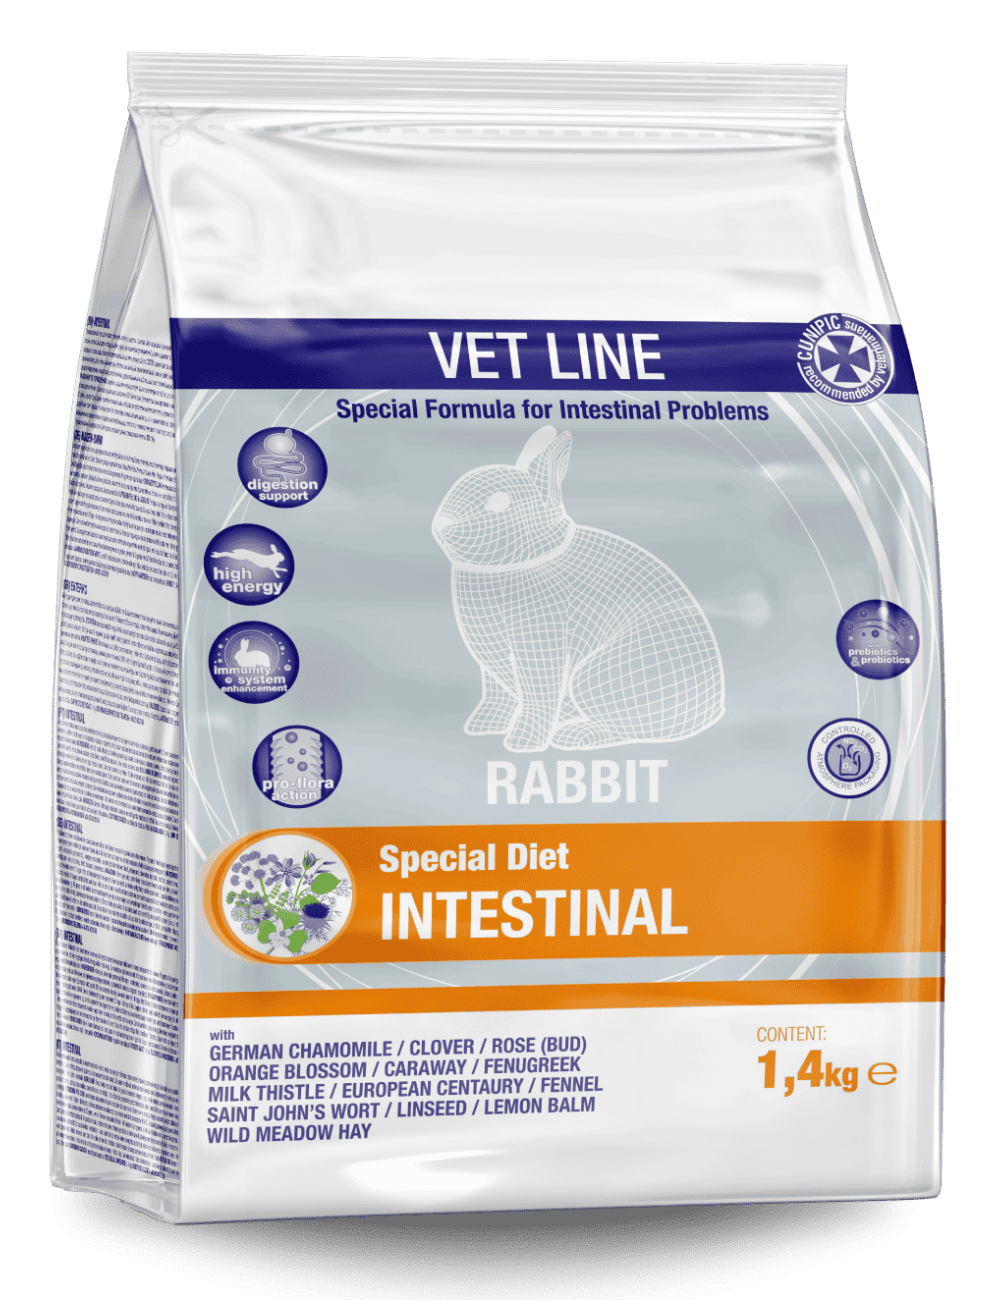 CUNIPIC - Vetline Rabbit Intestinal